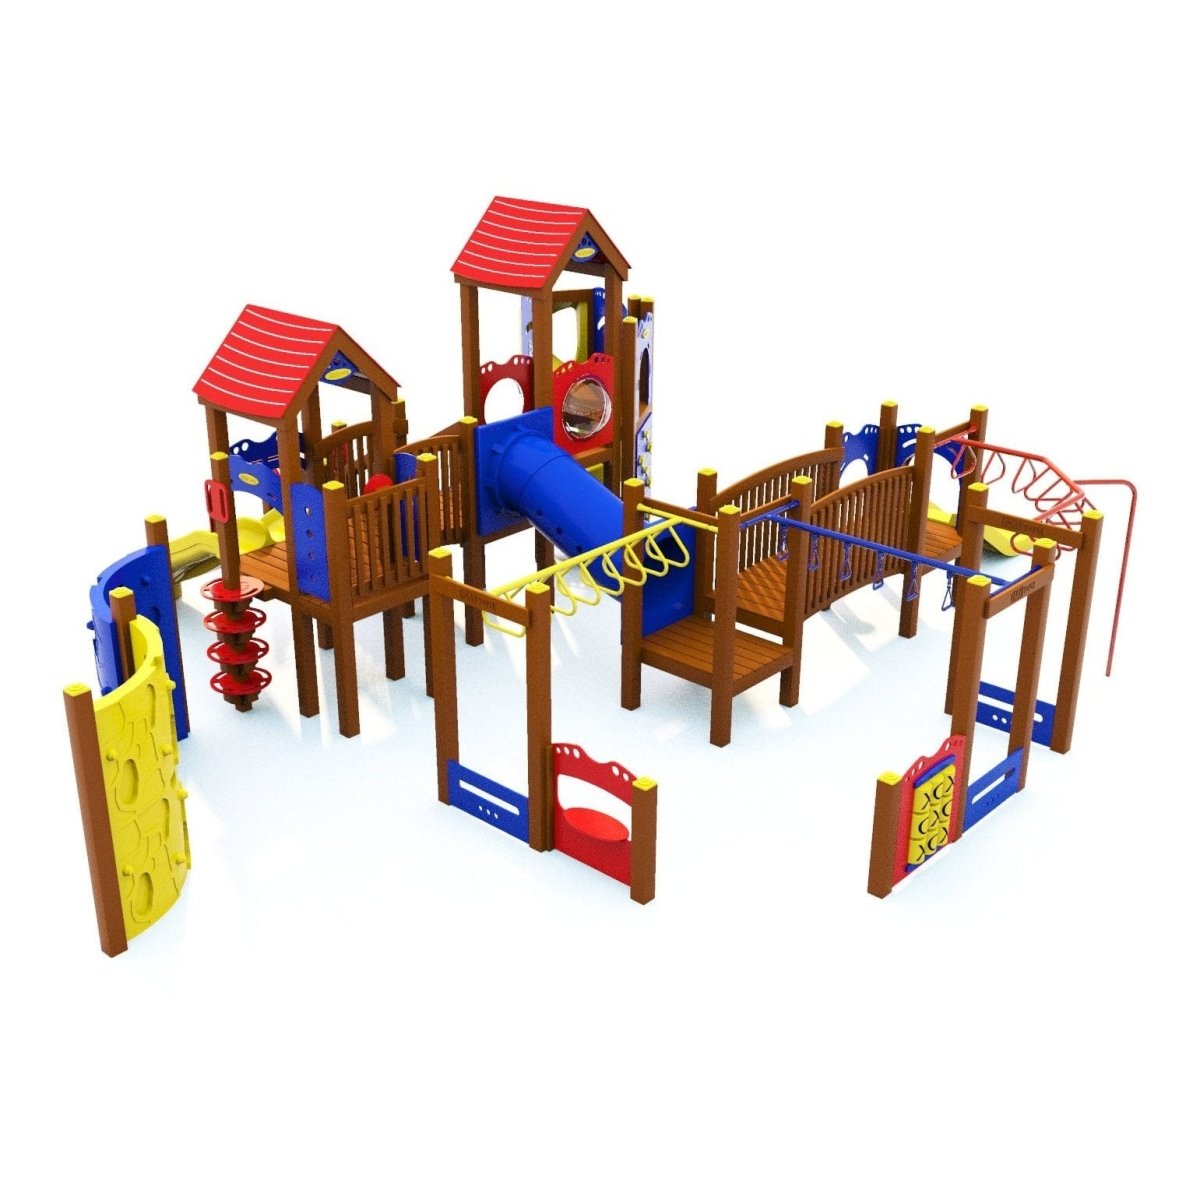 Skyward Playset - School-Age Playgrounds - Playtopia, Inc.